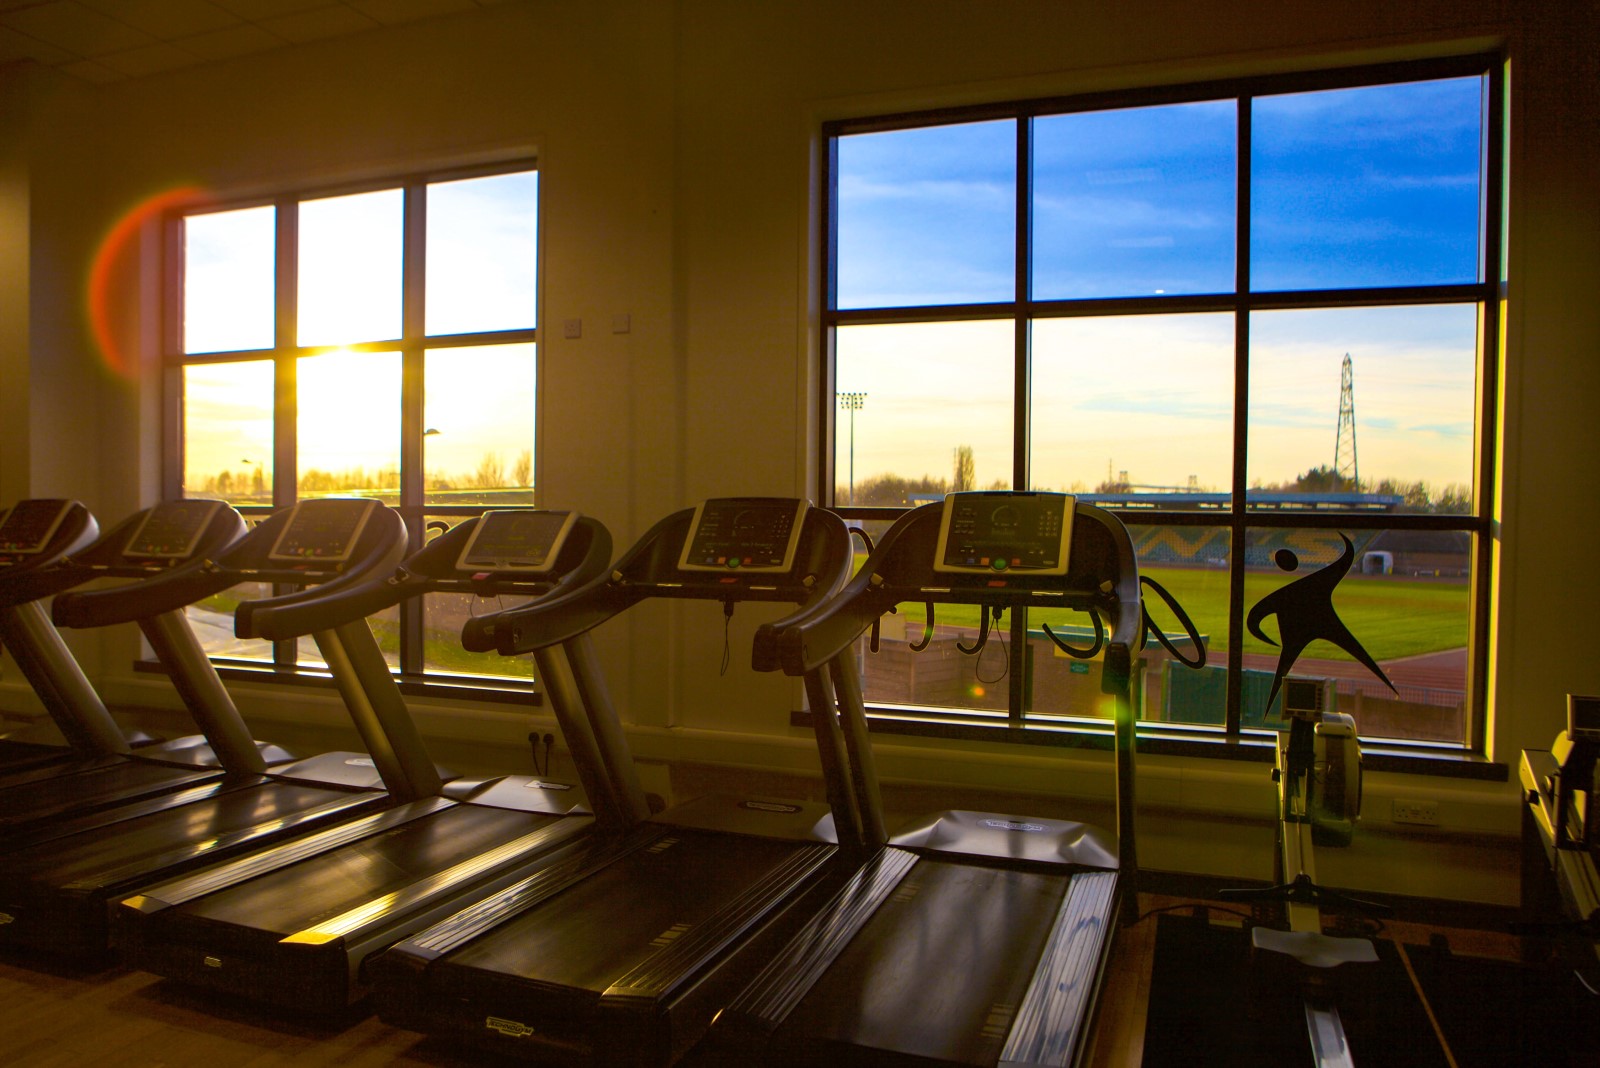 Line of tradmills with sun setting through gym window.jpg